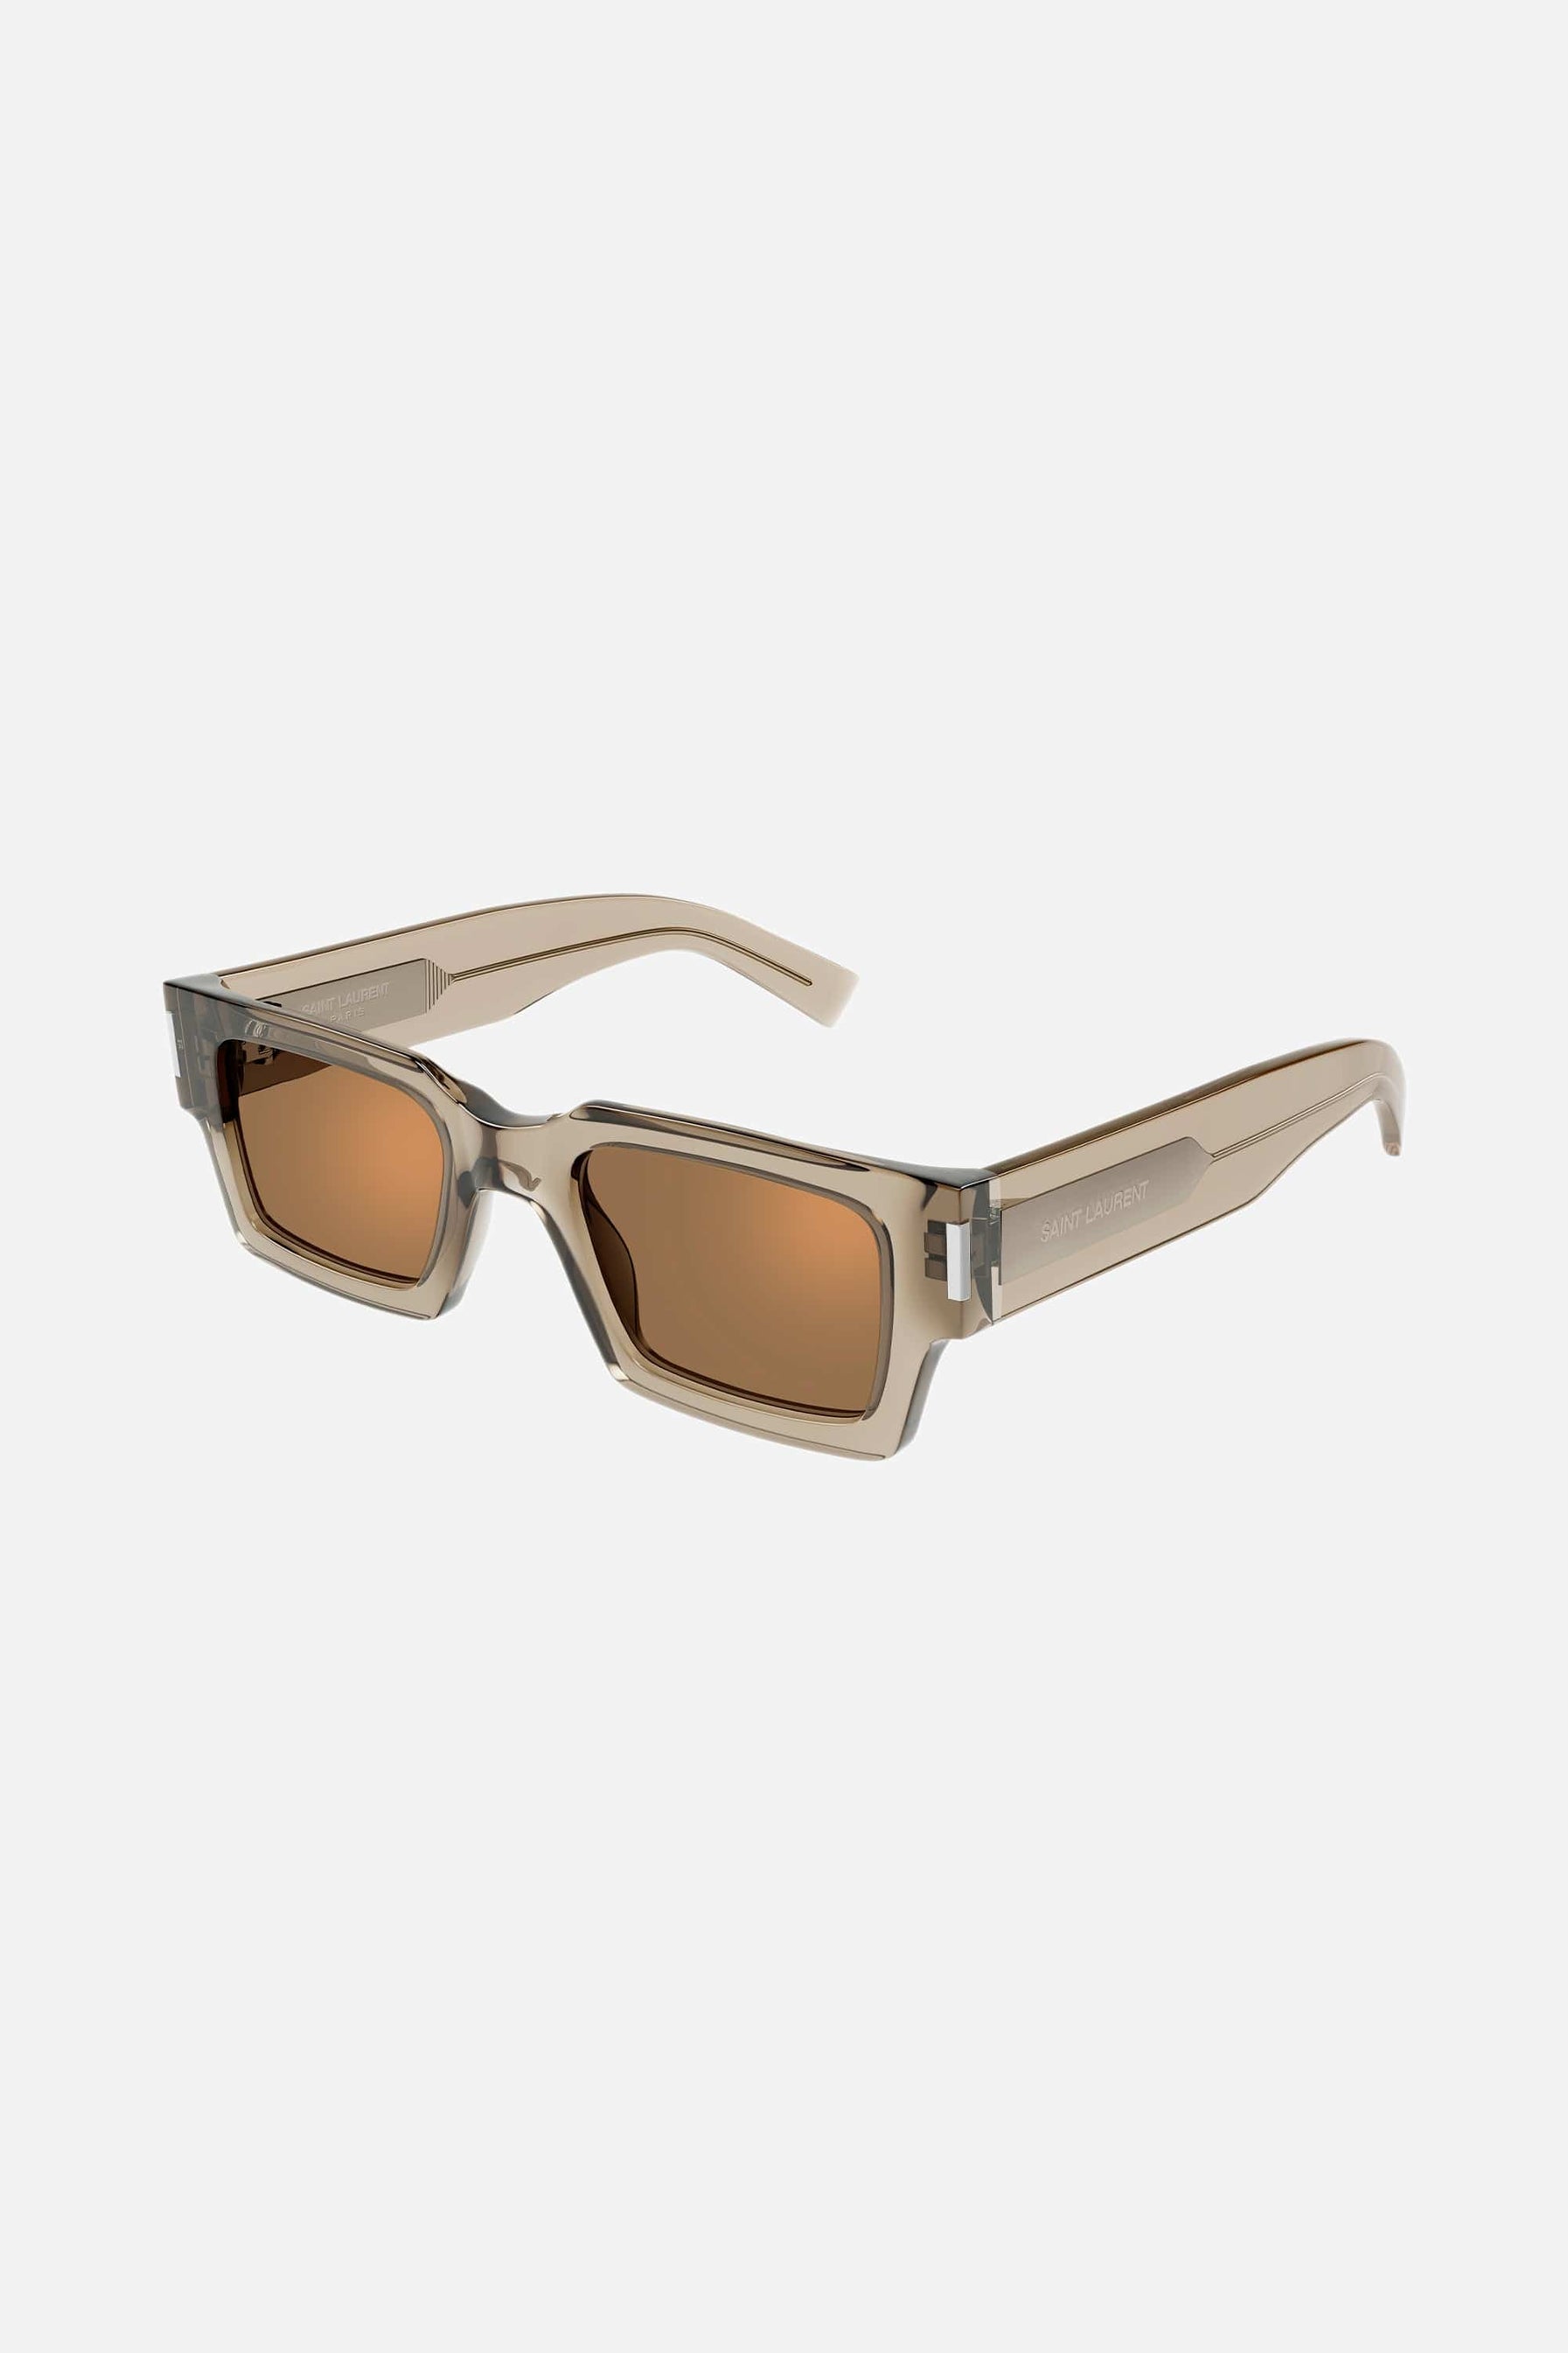 Saint Laurent bold crystal squared sunglasses - Eyewear Club